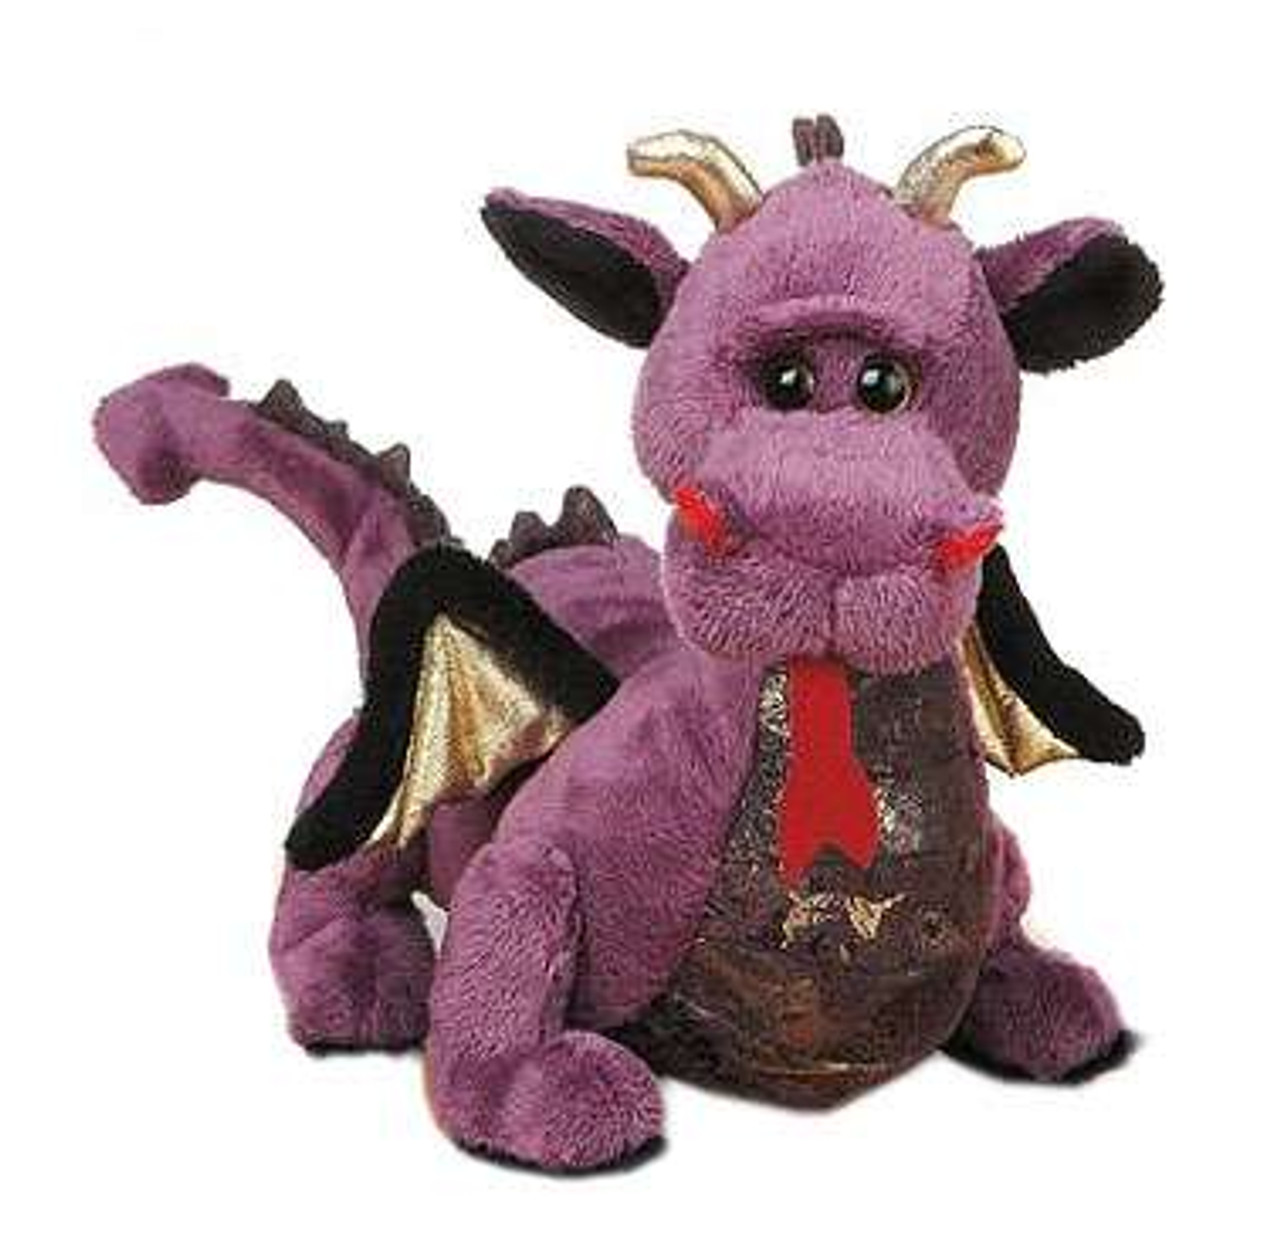 webkinz dragon plush